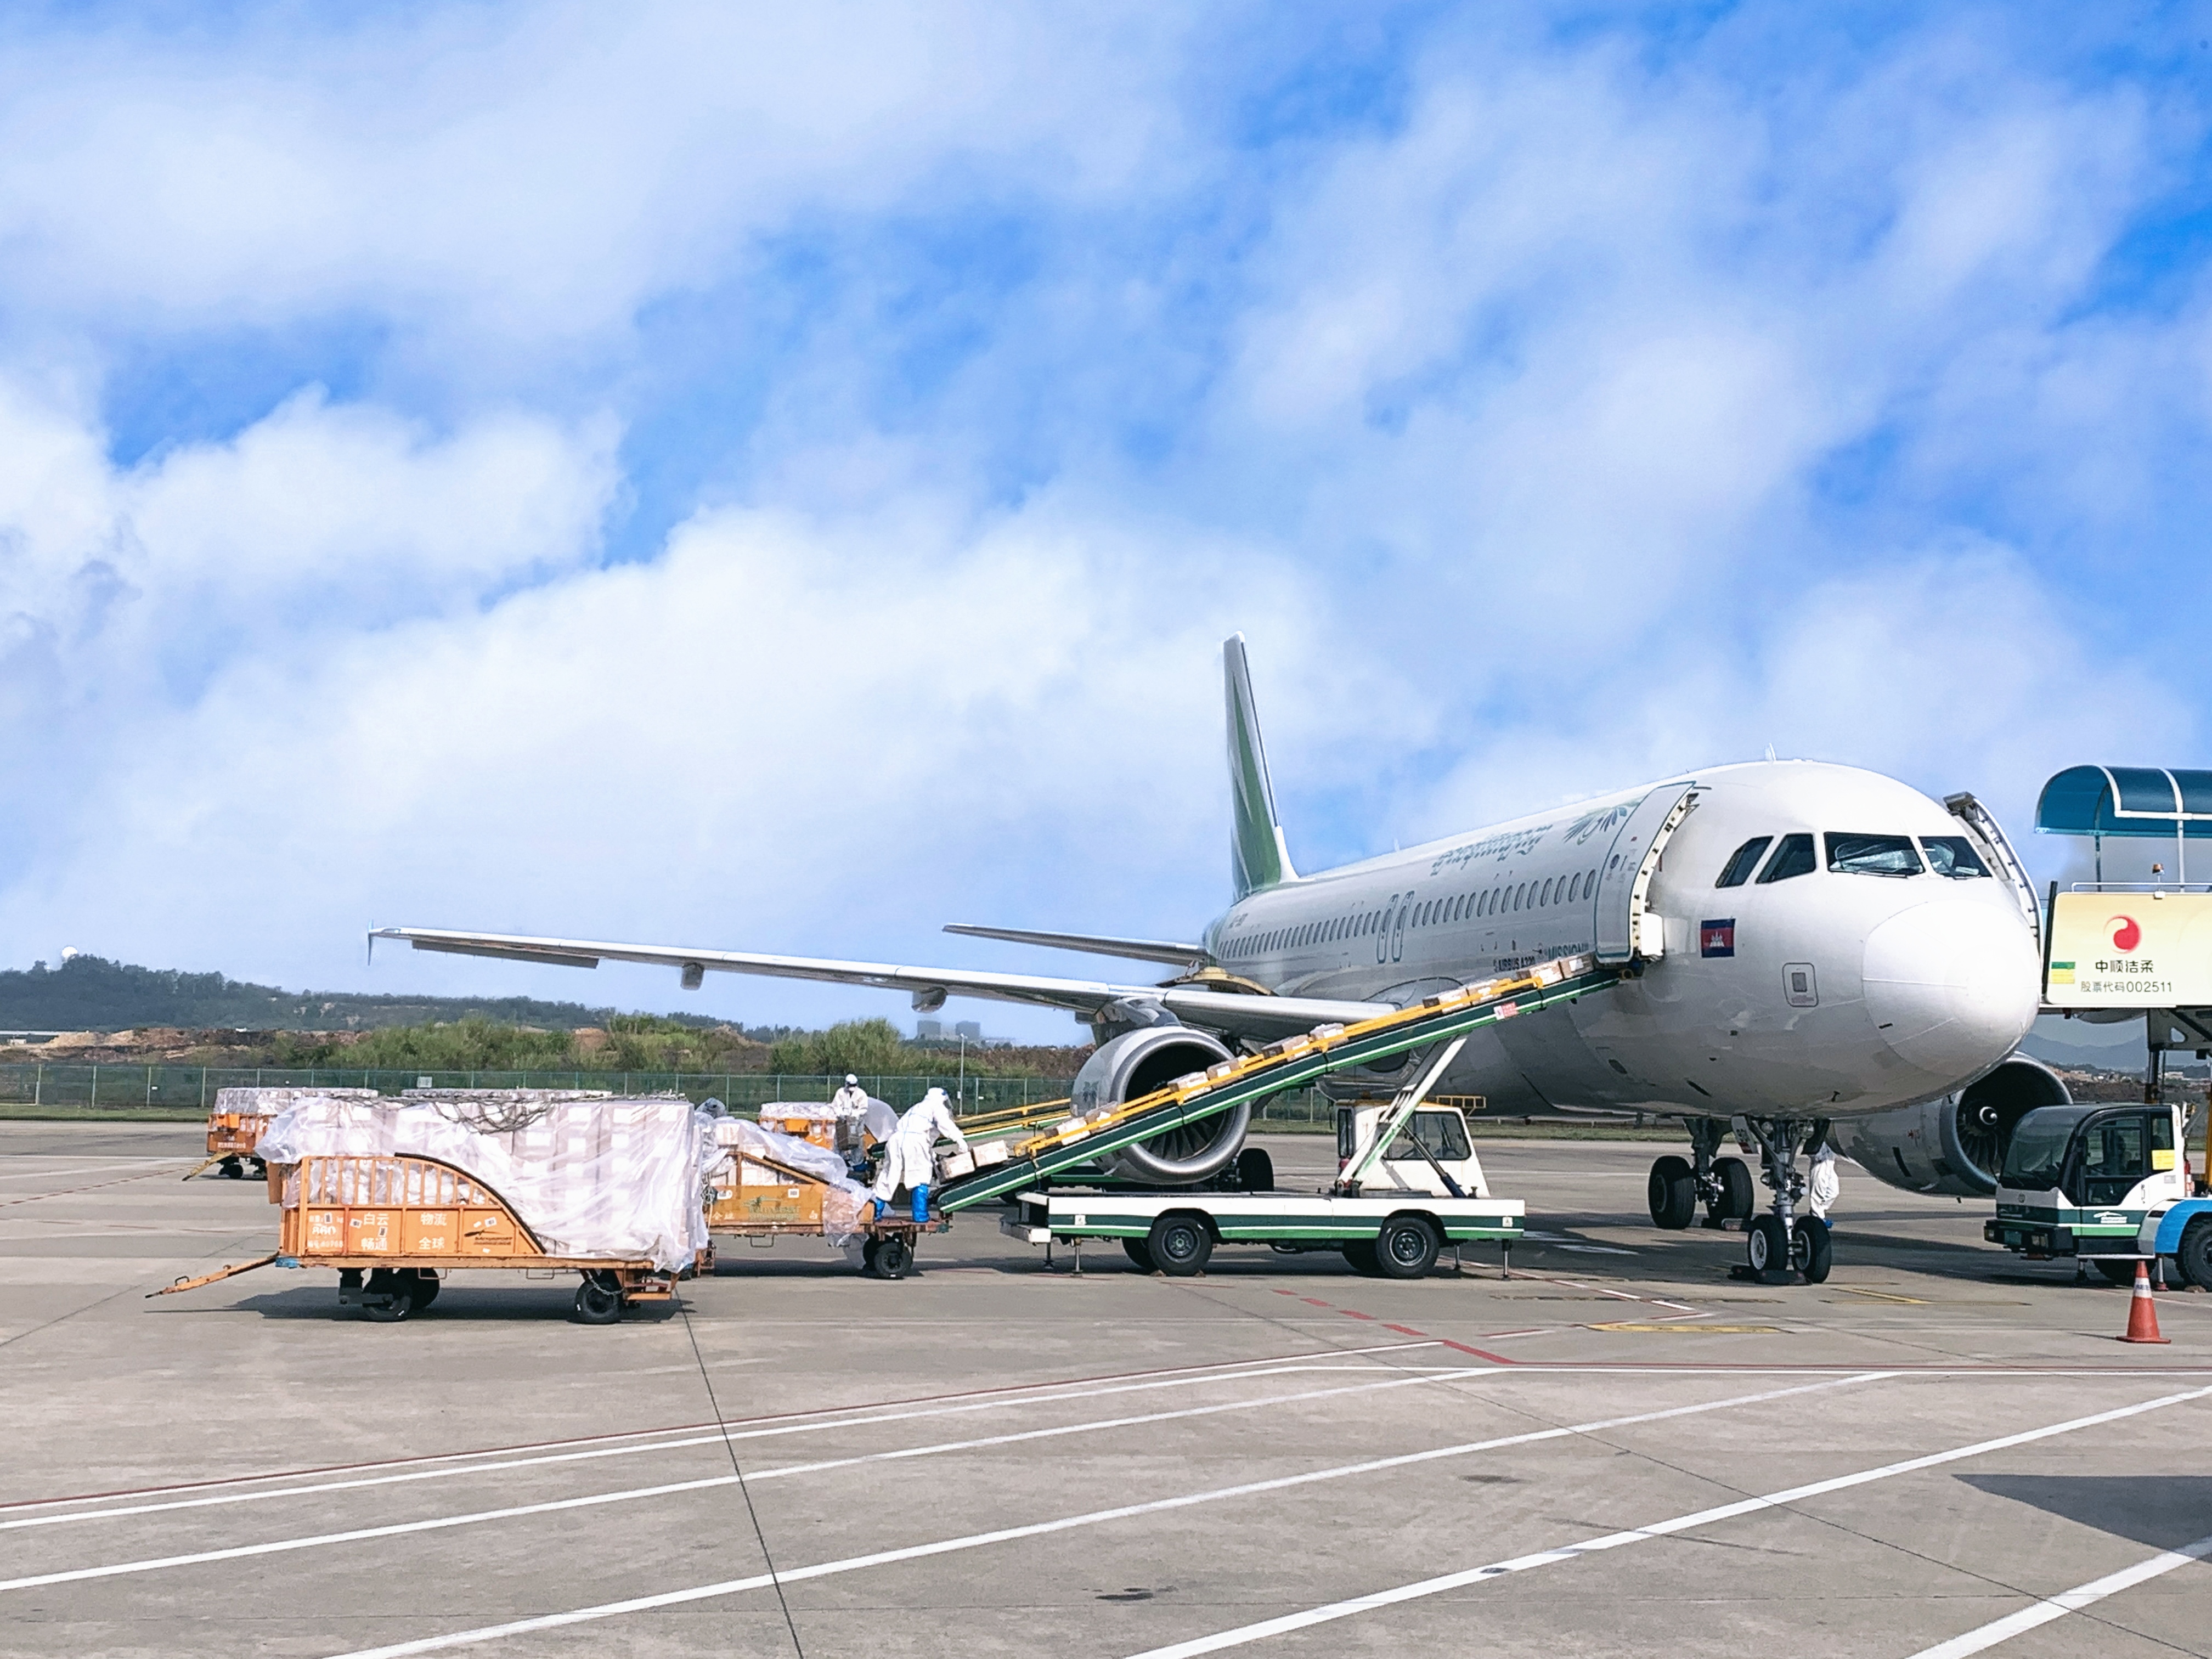 Air cargo Shenzhen Guangzhou to Philippines door to door shipping agent